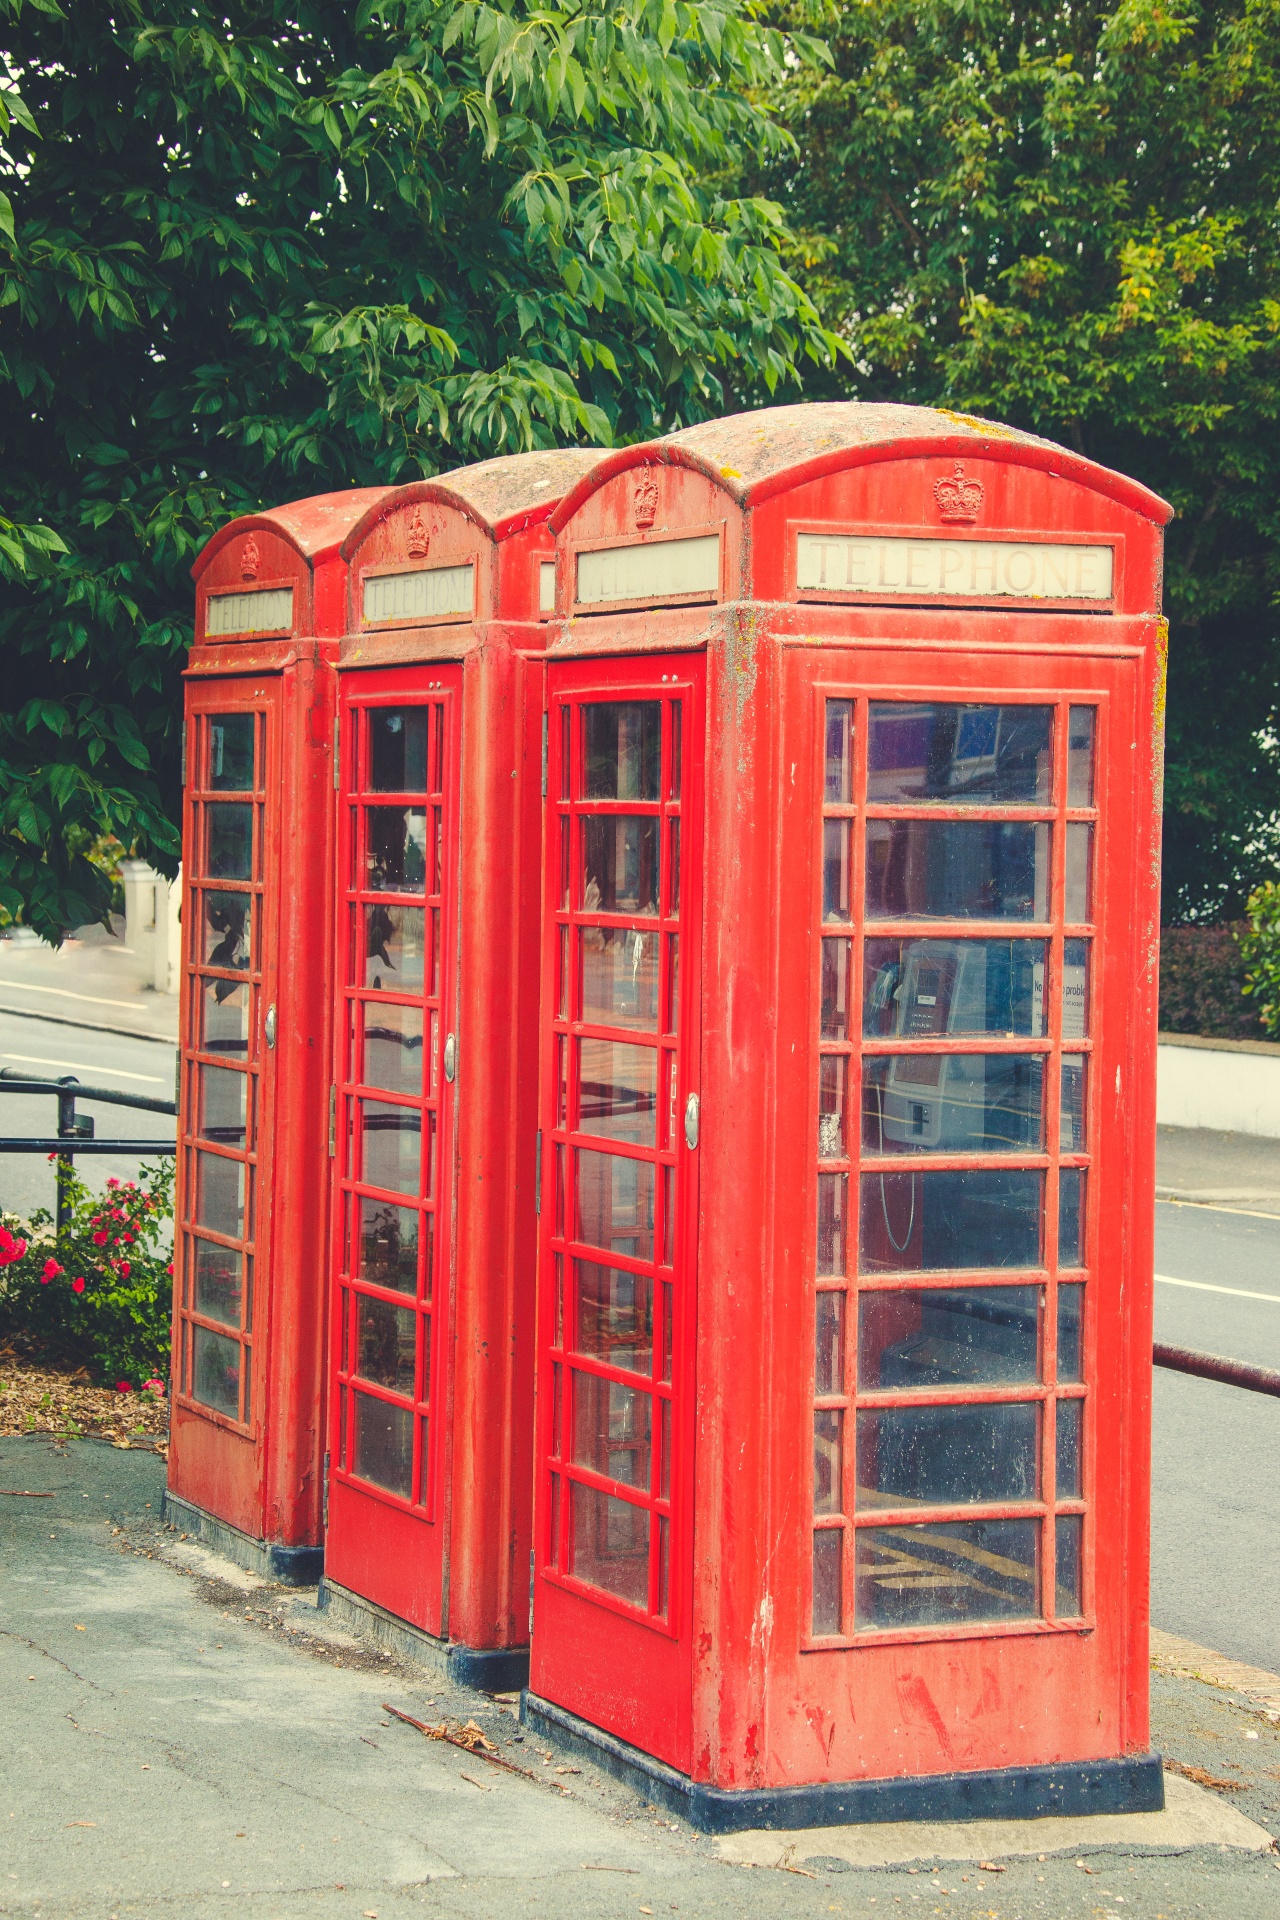 Cabinas telefónicas británicas